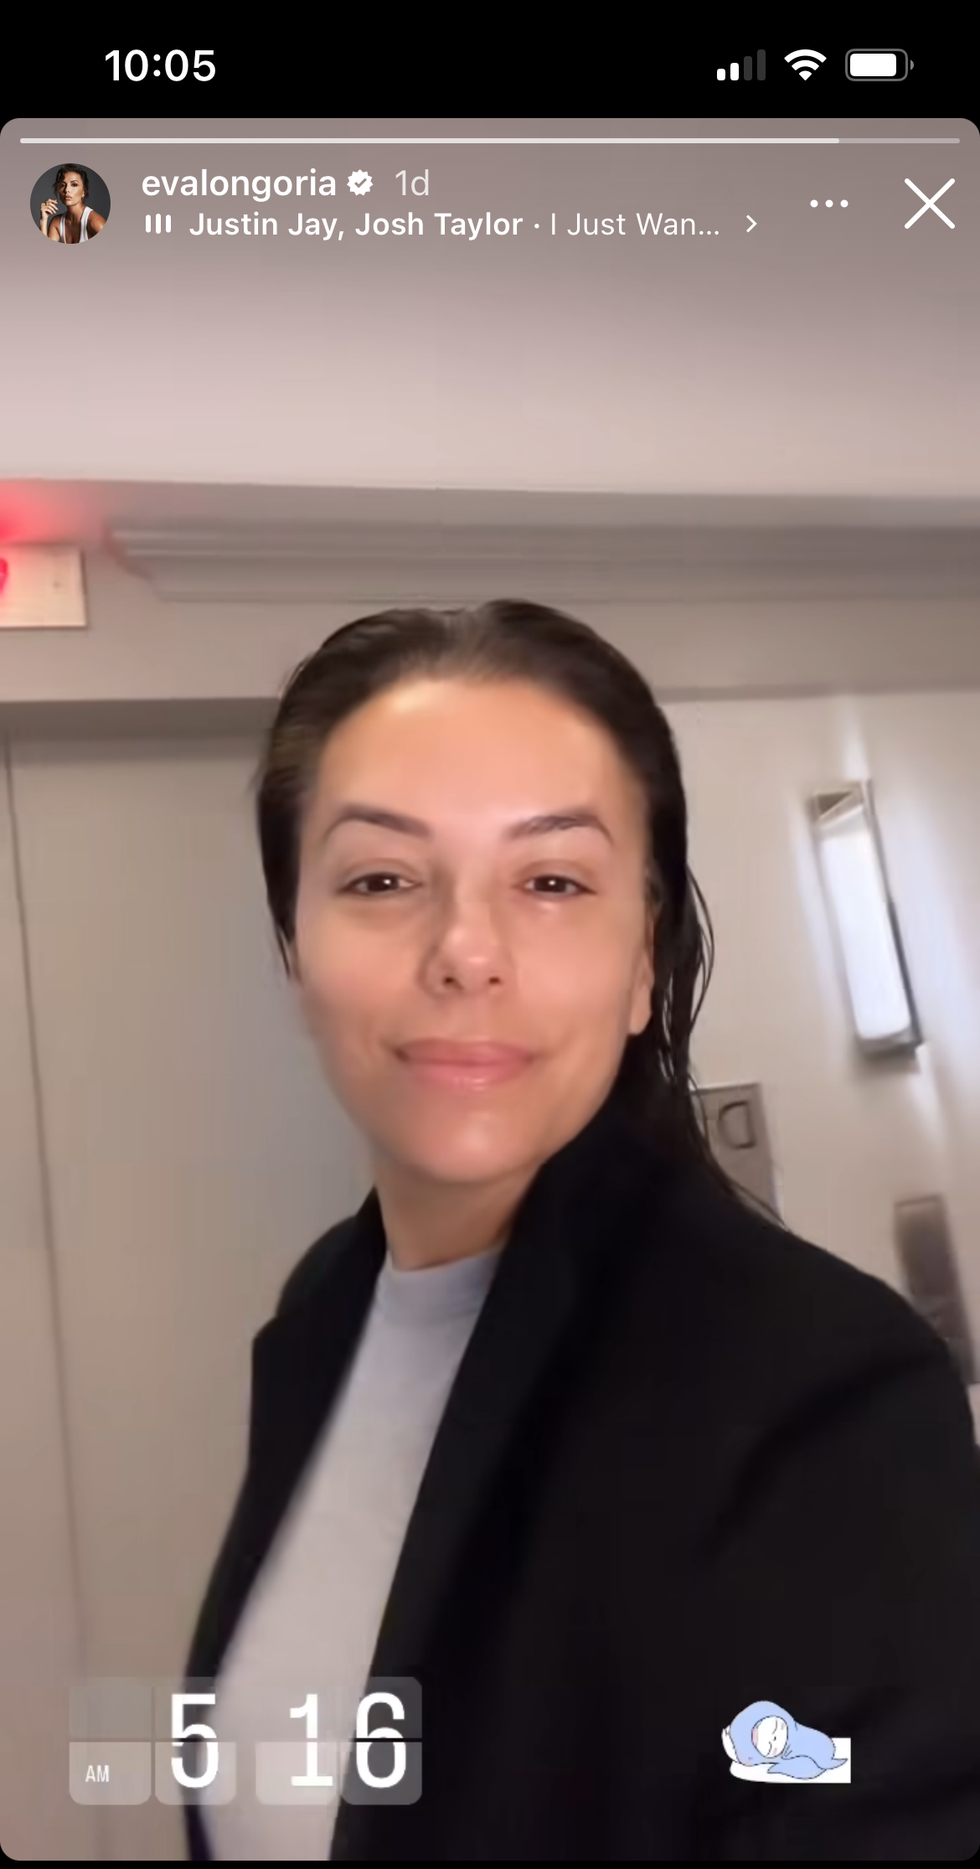 eva longoria taking a selfie in a hotel coridor with no makeup